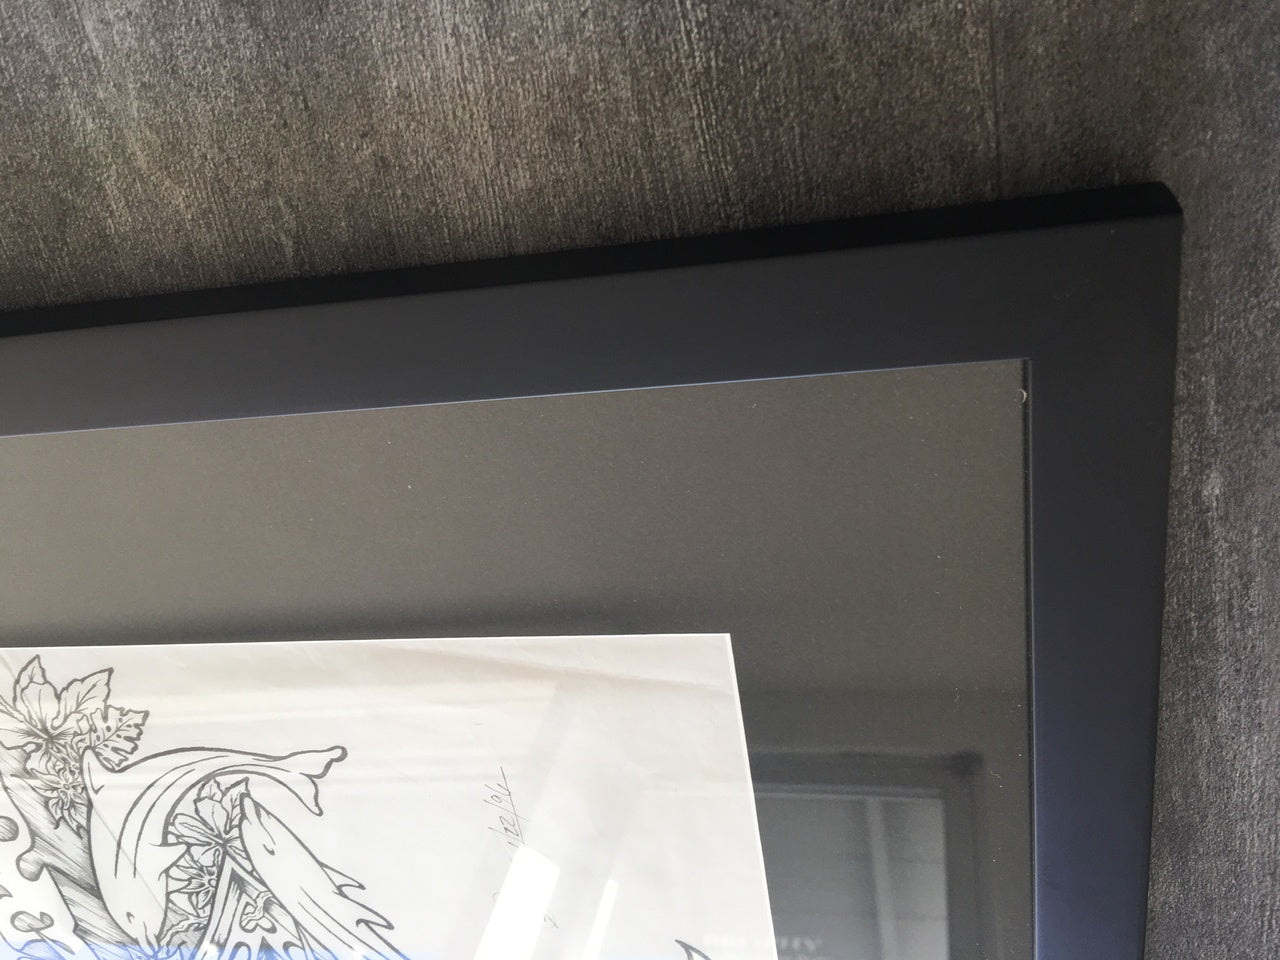 SOLD! NATIVE Joe's Graphite Sketch 20" x 17" Framed in black frame, matted and plexiglass